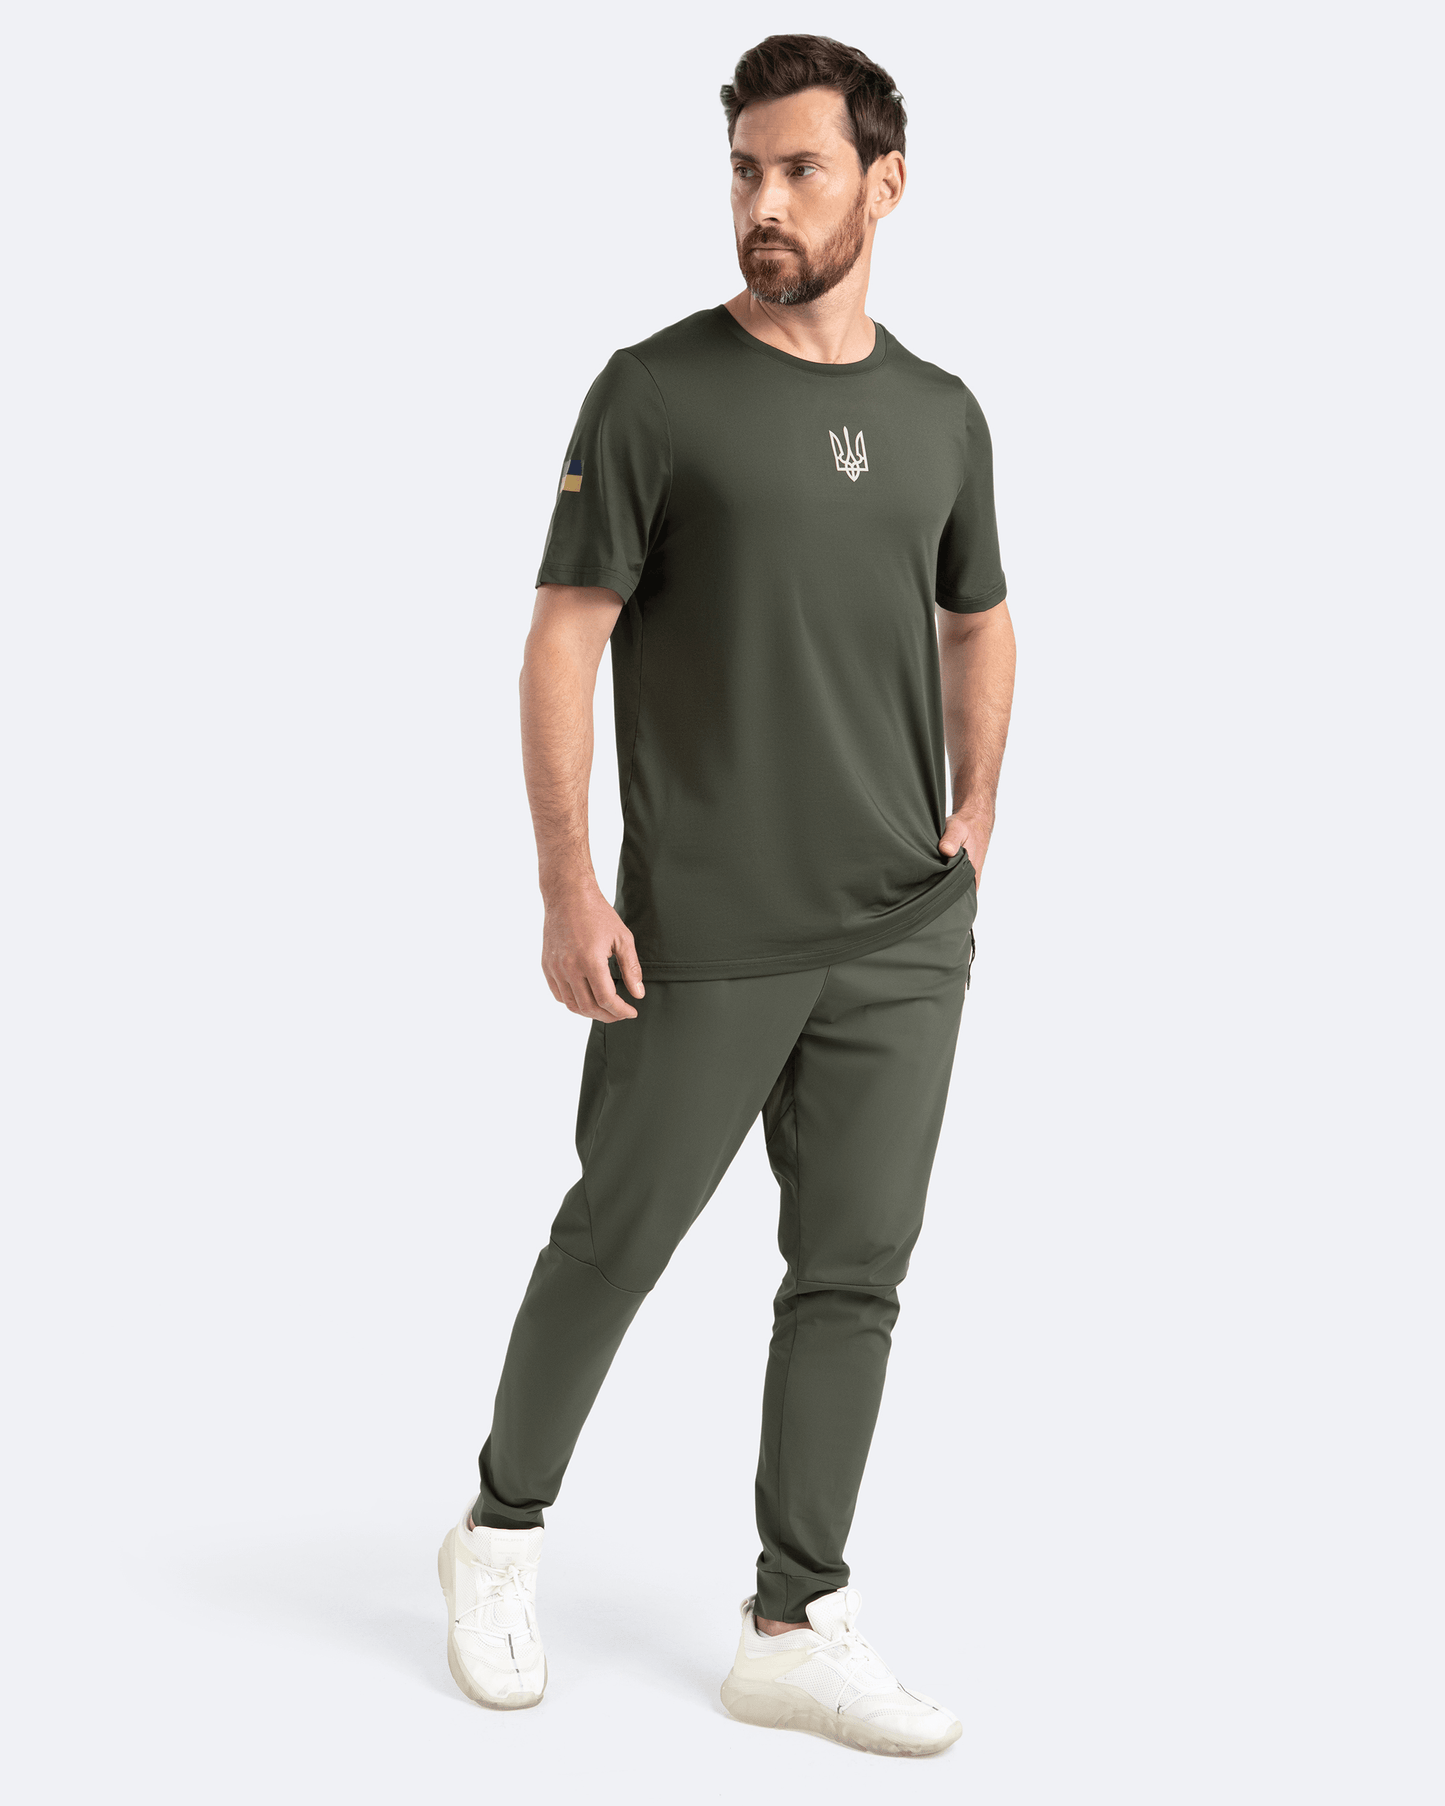 BetterMe Khaki Green Matching Joggers & T-shirt set for men